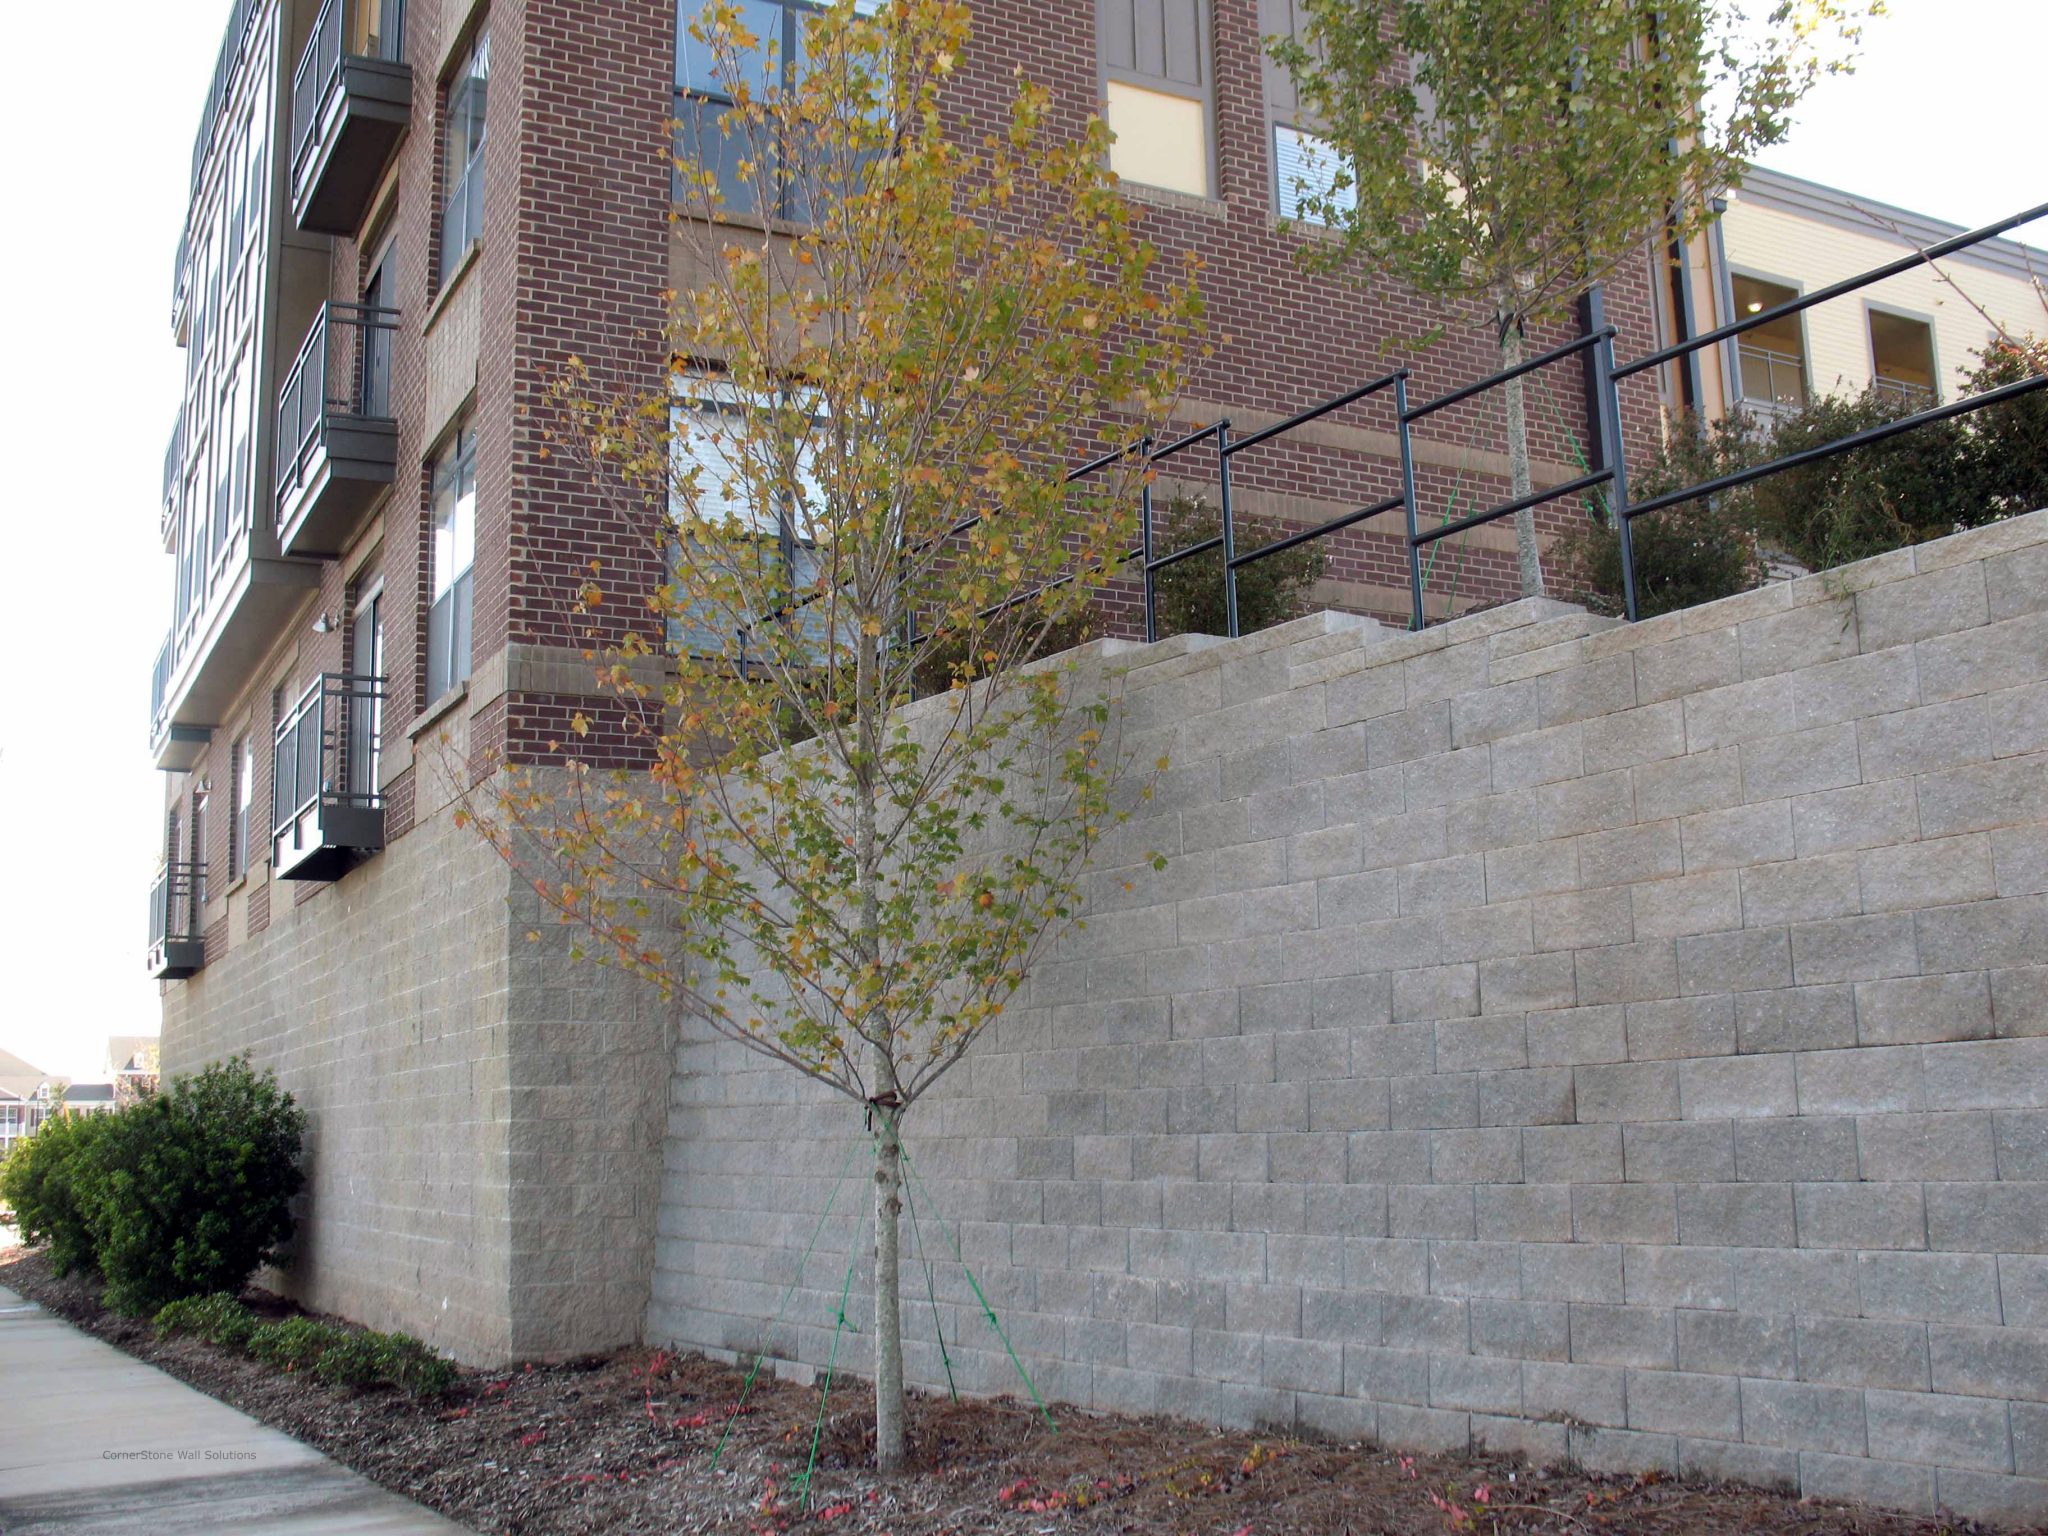 CornerStone Retaining Wall for Apartments in Calgary, Alberta